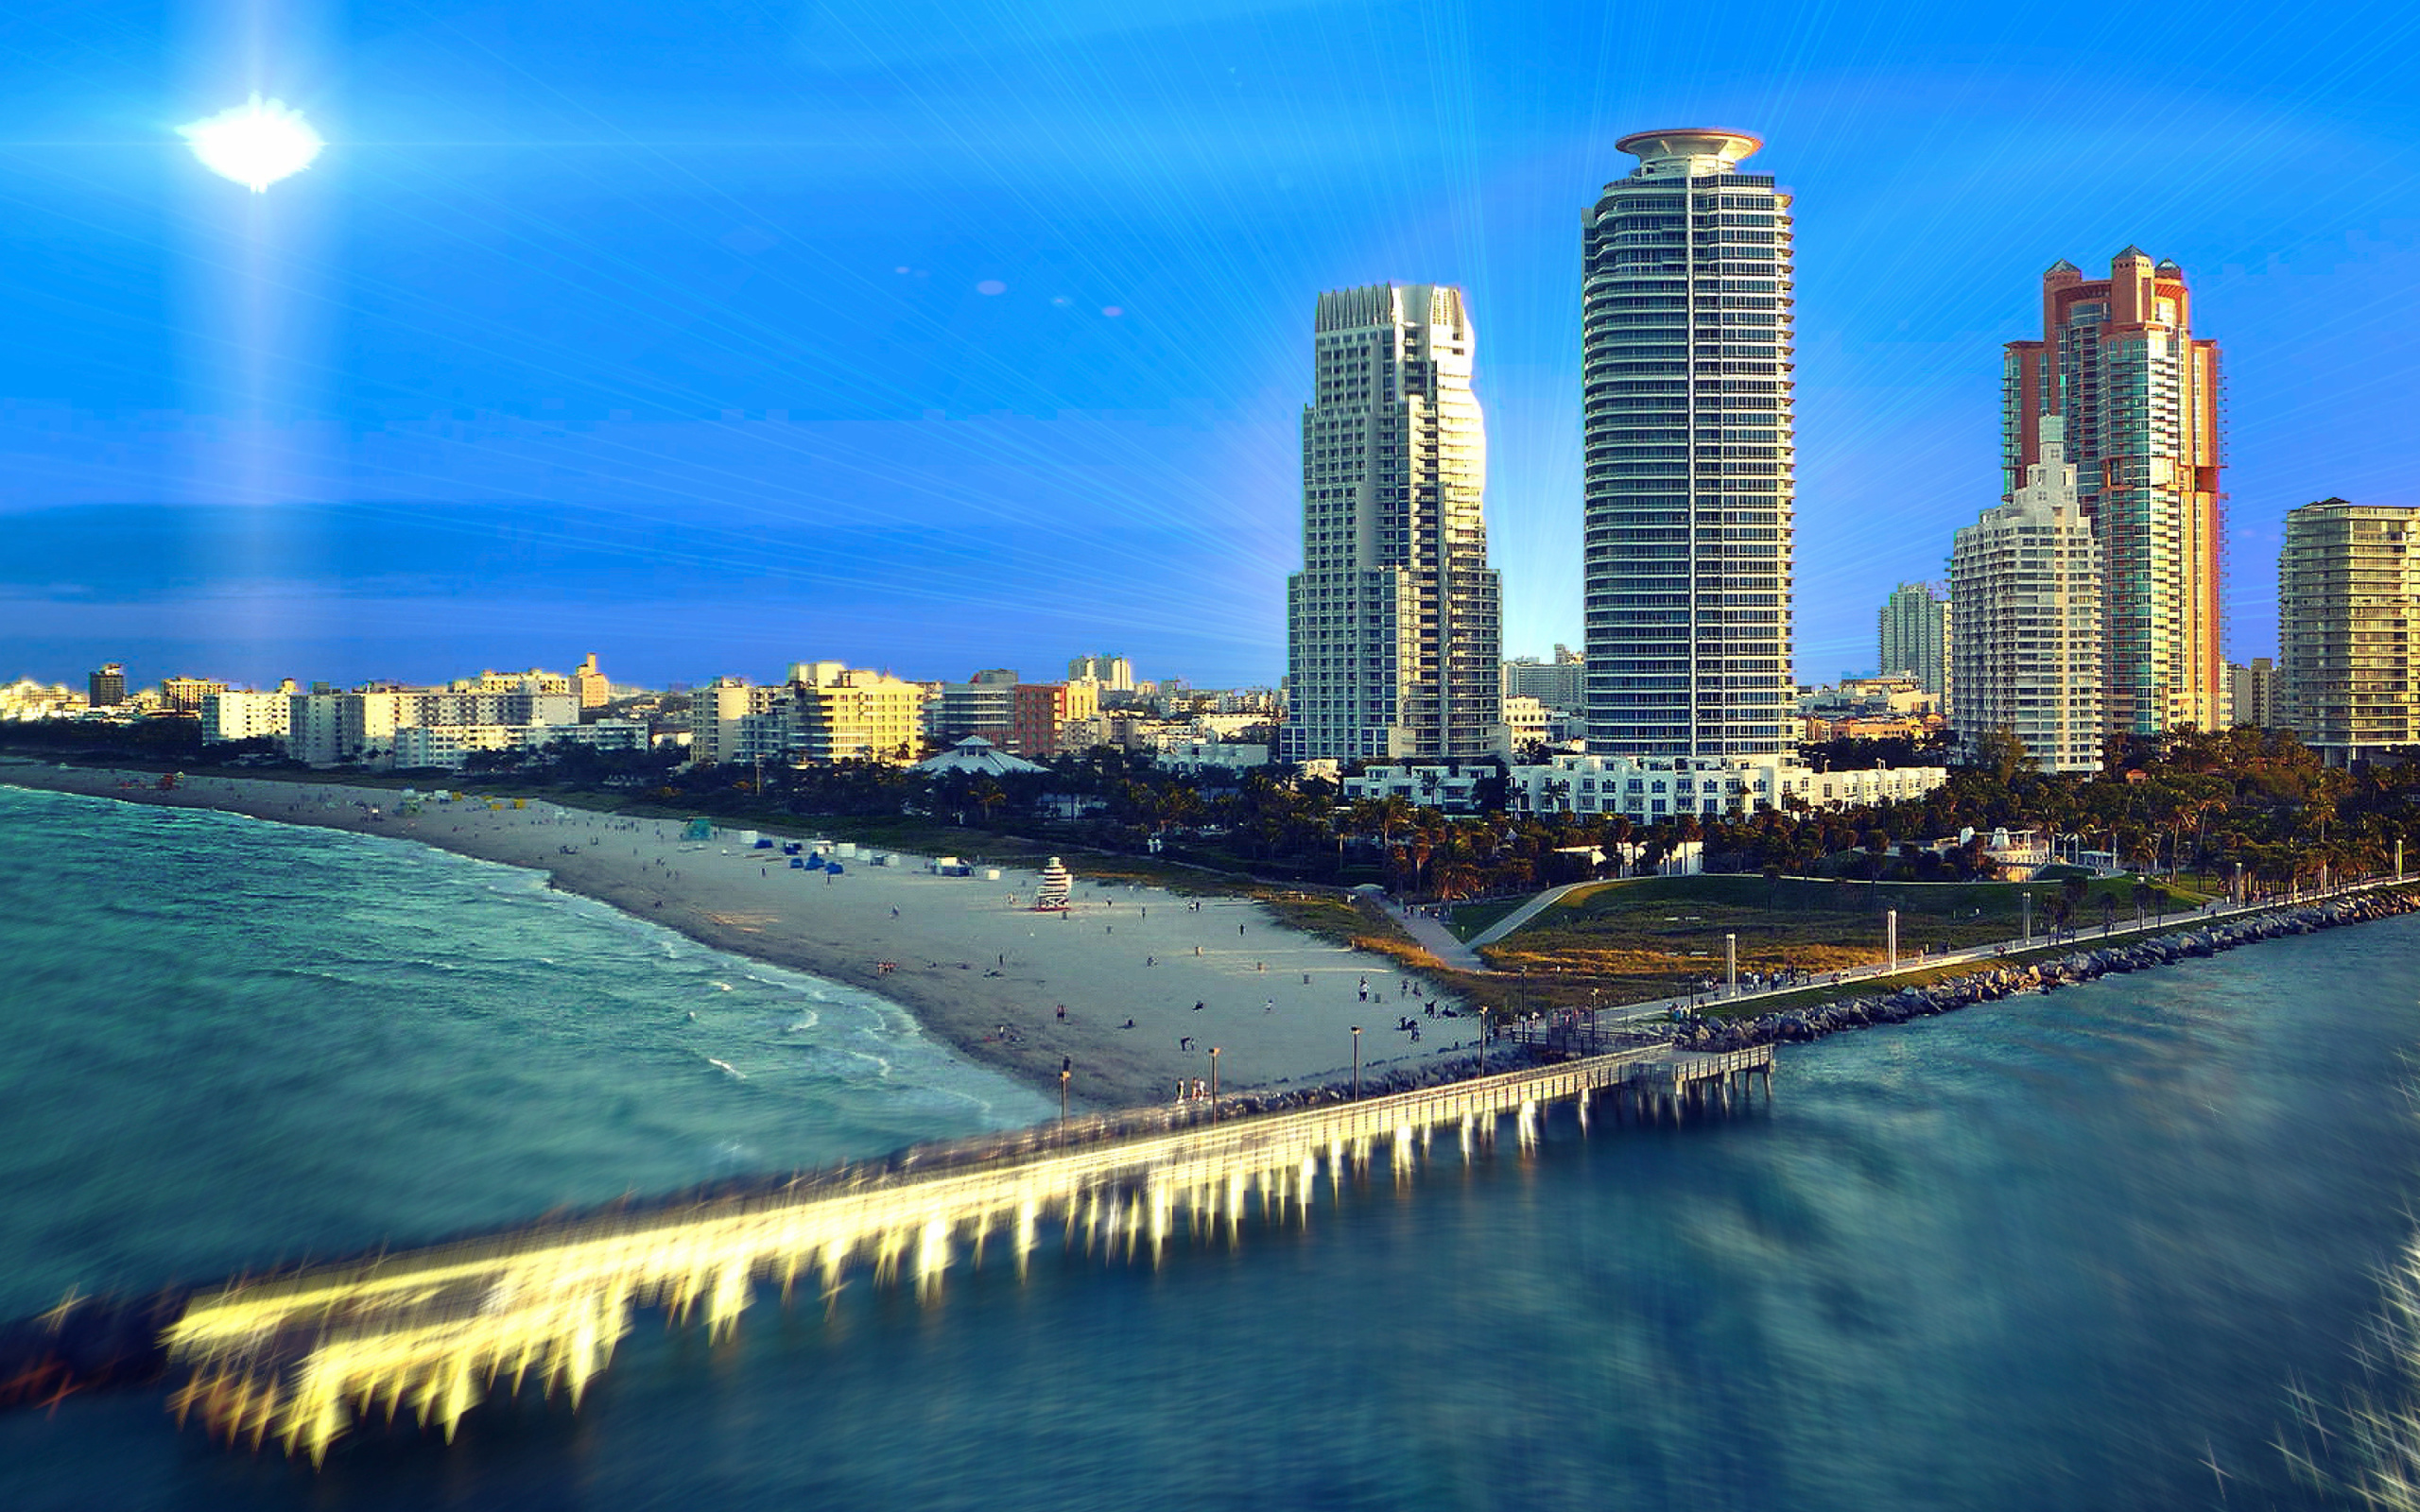 Das Miami Beach with Hotels Wallpaper 2560x1600